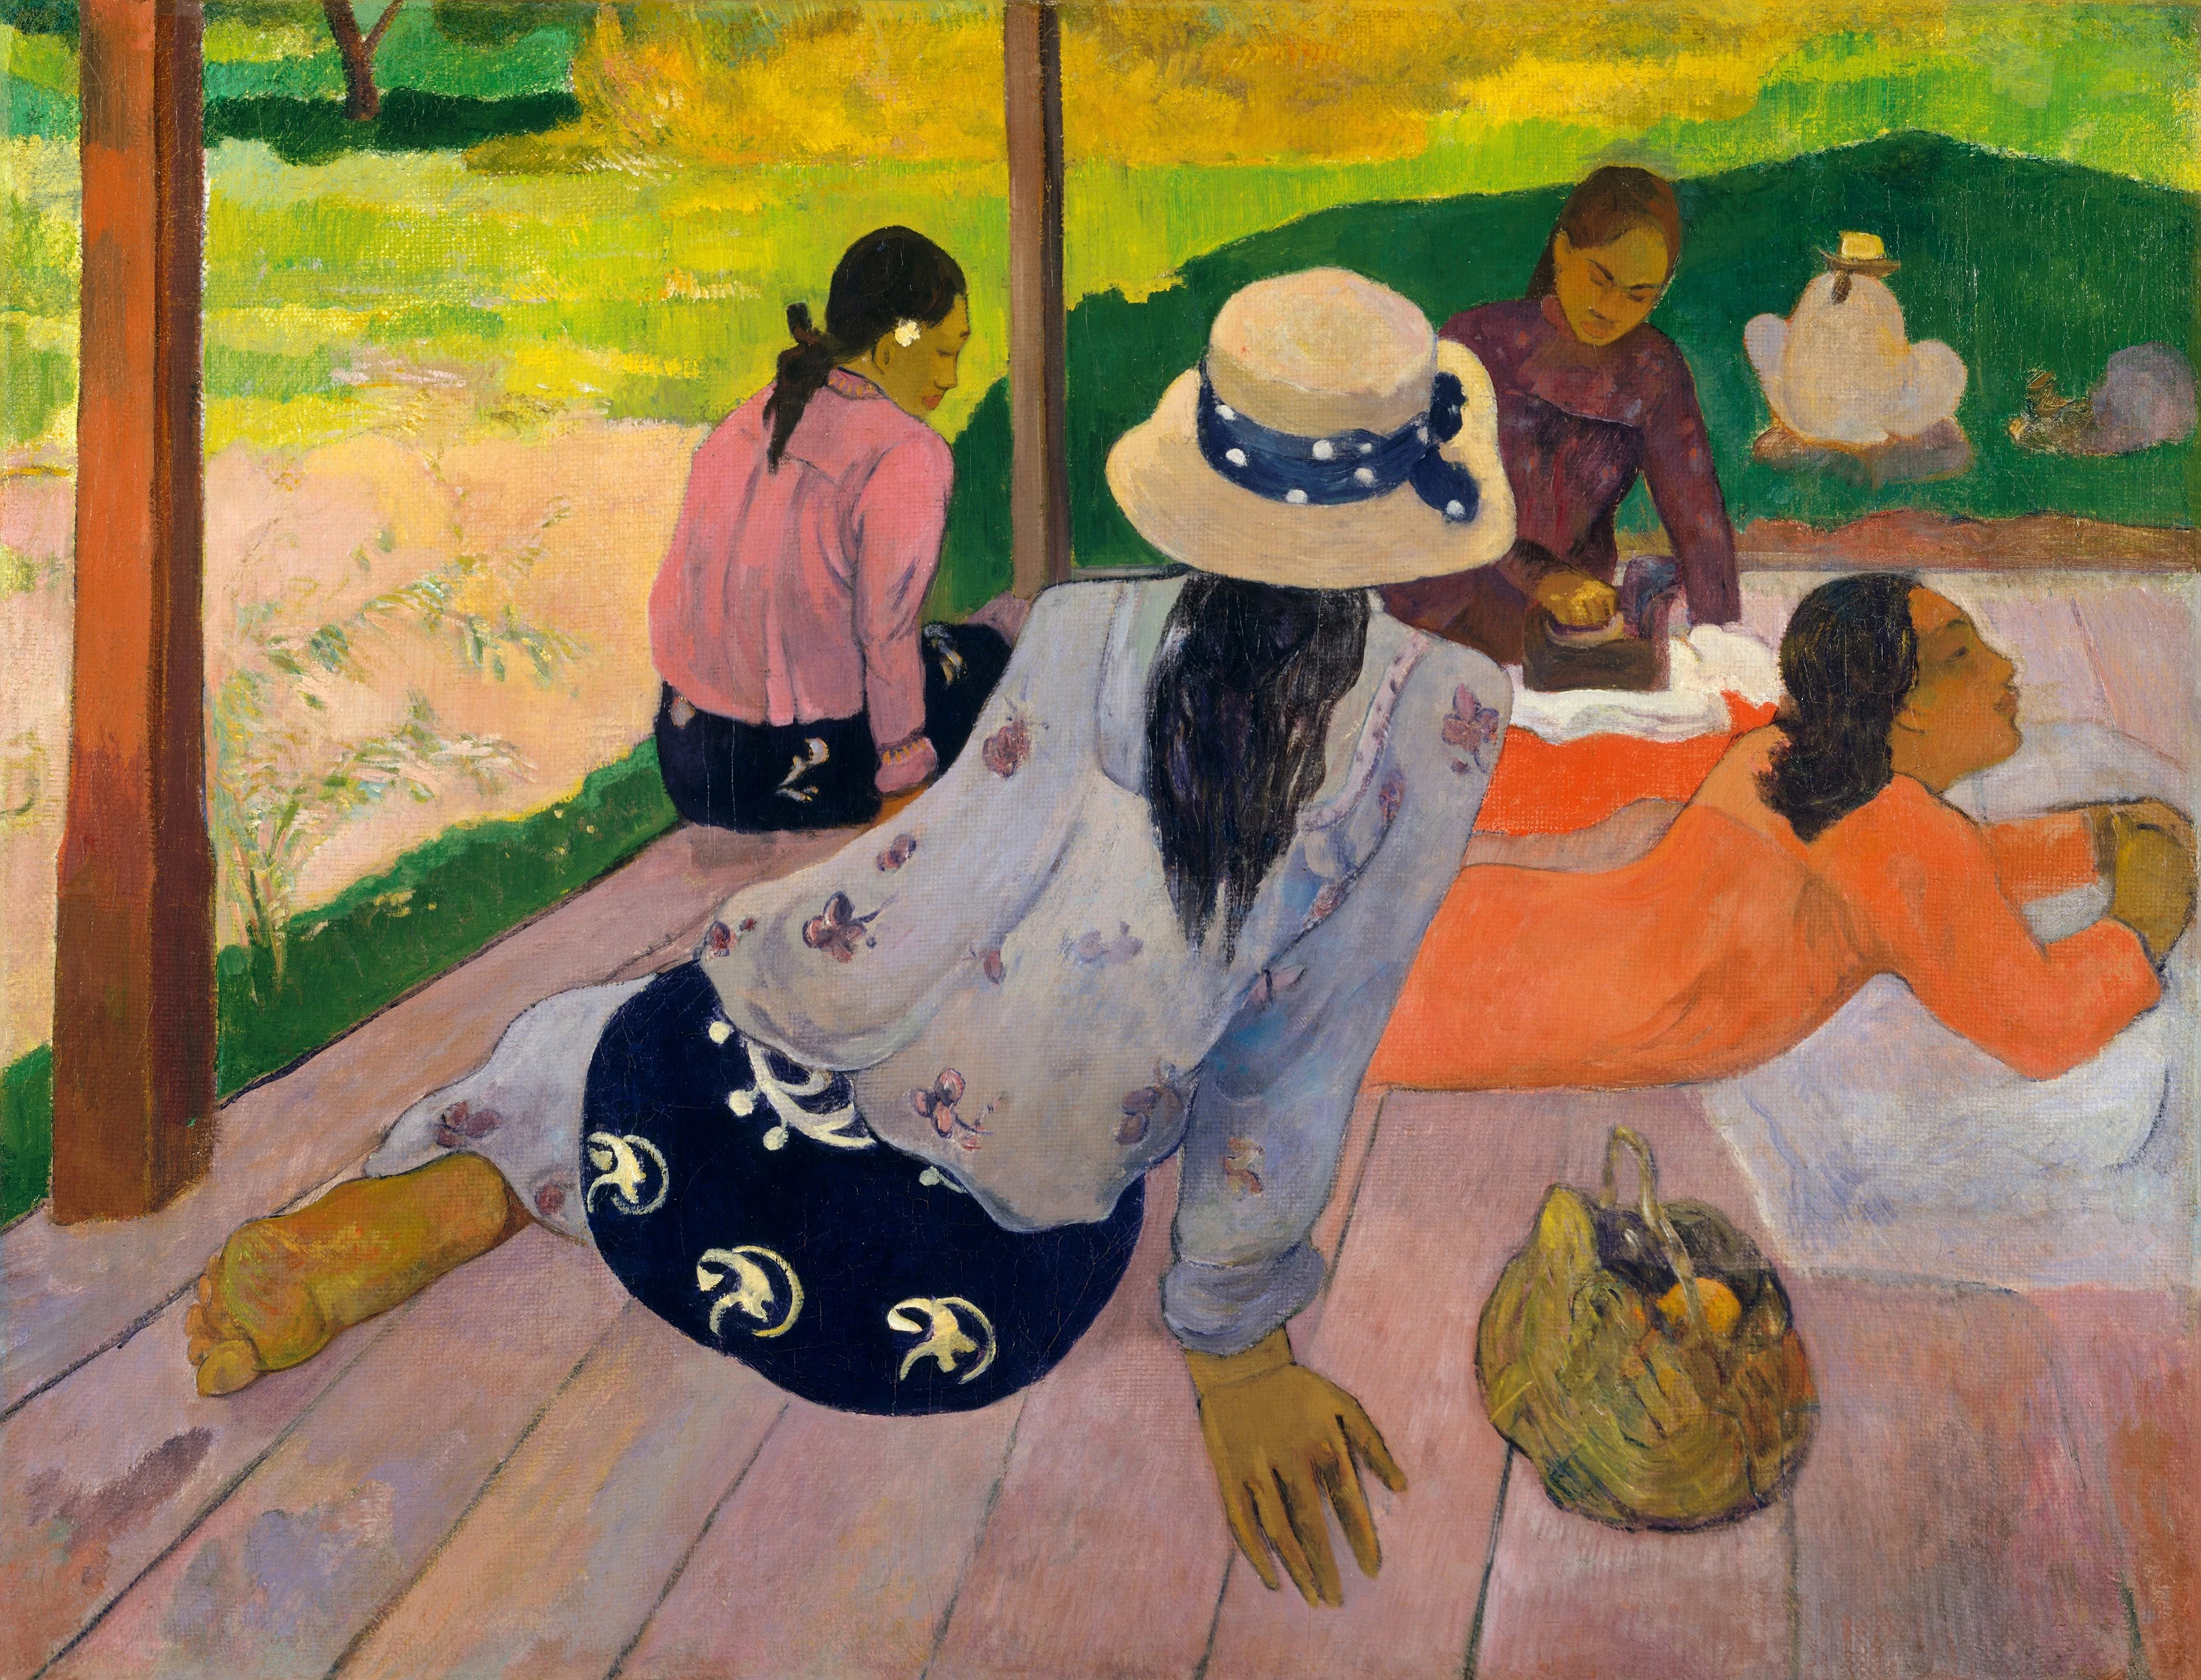 Paul Gauguin, The Artists